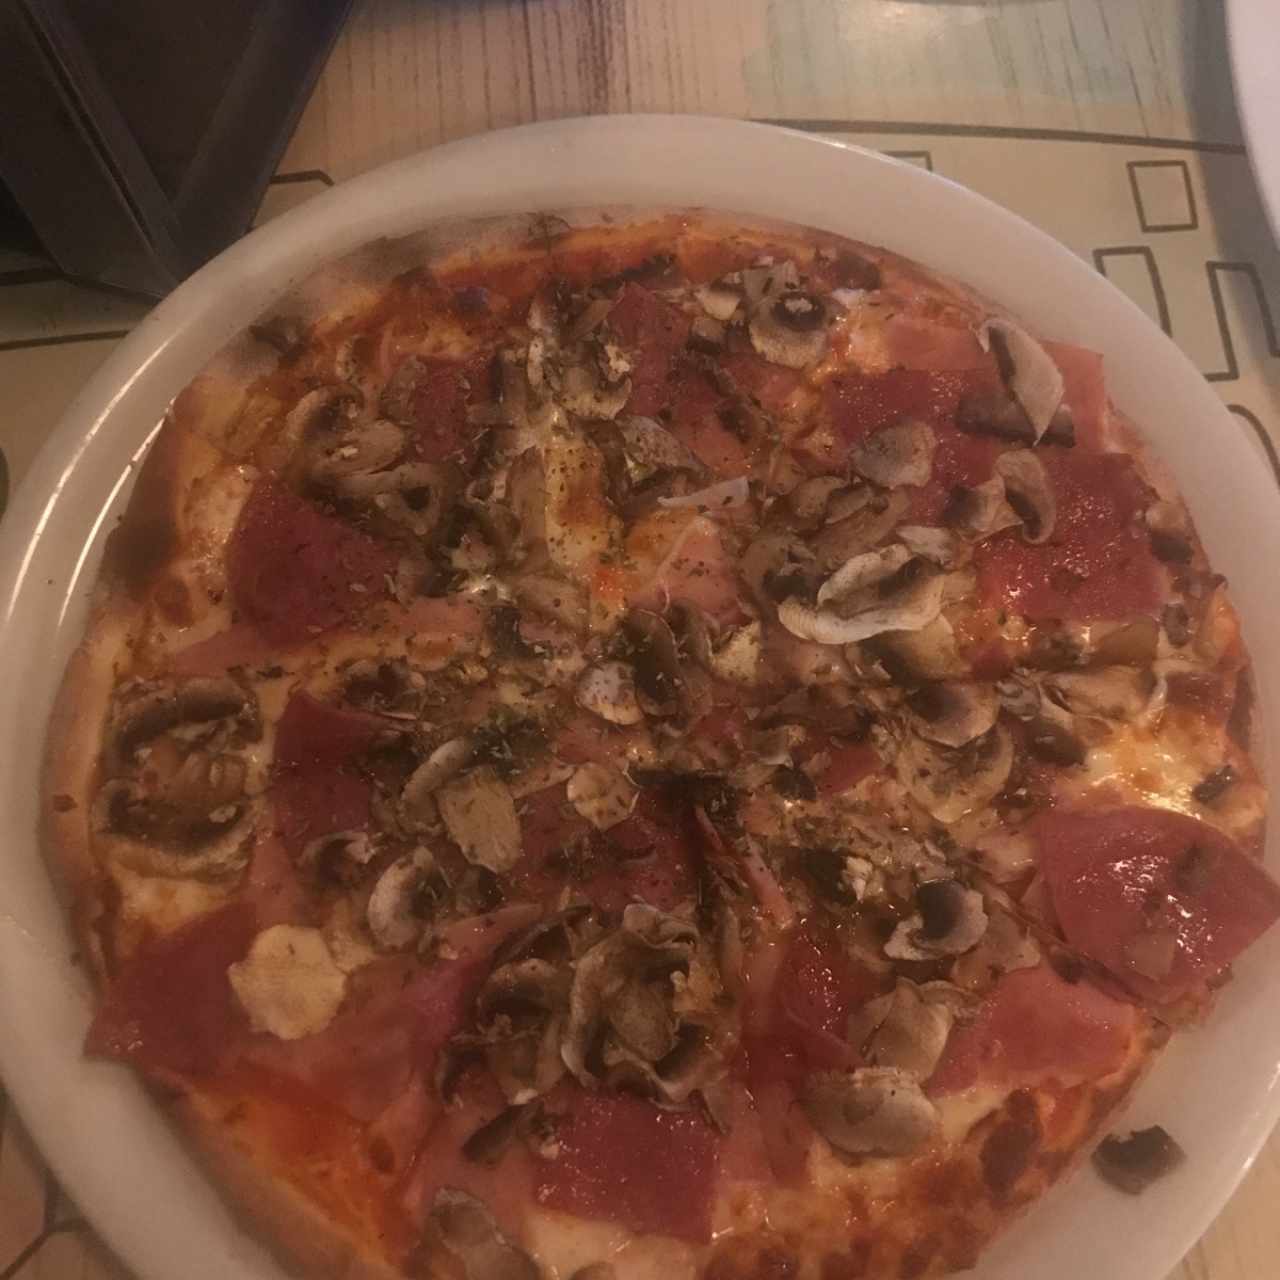 pizza 4 estaciones 